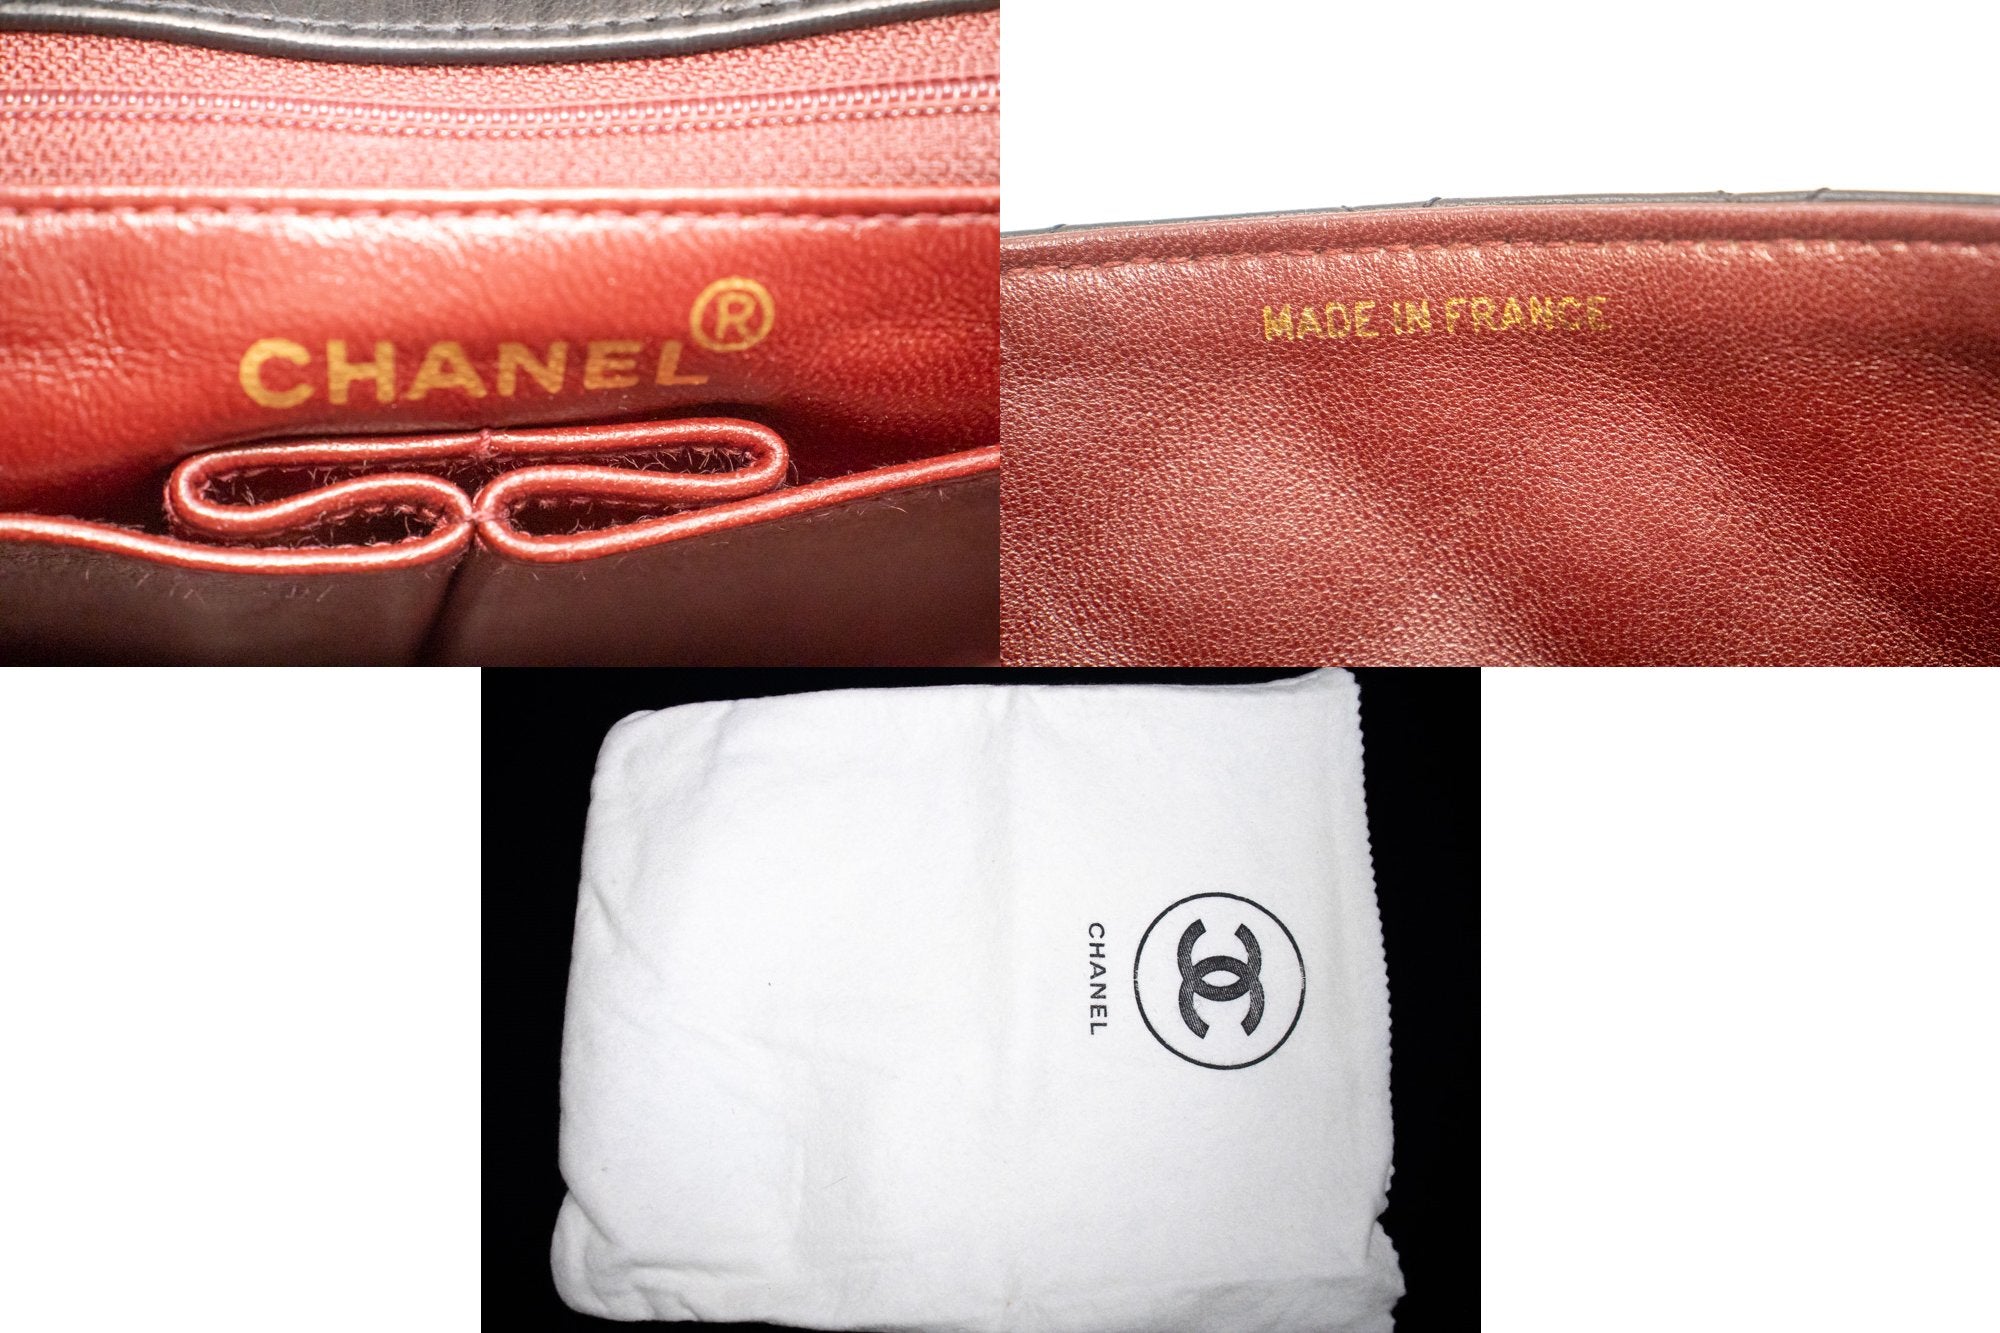 Chanel Mini Square Small Chain Shoulder Bag Crossbody Black Quilt G36